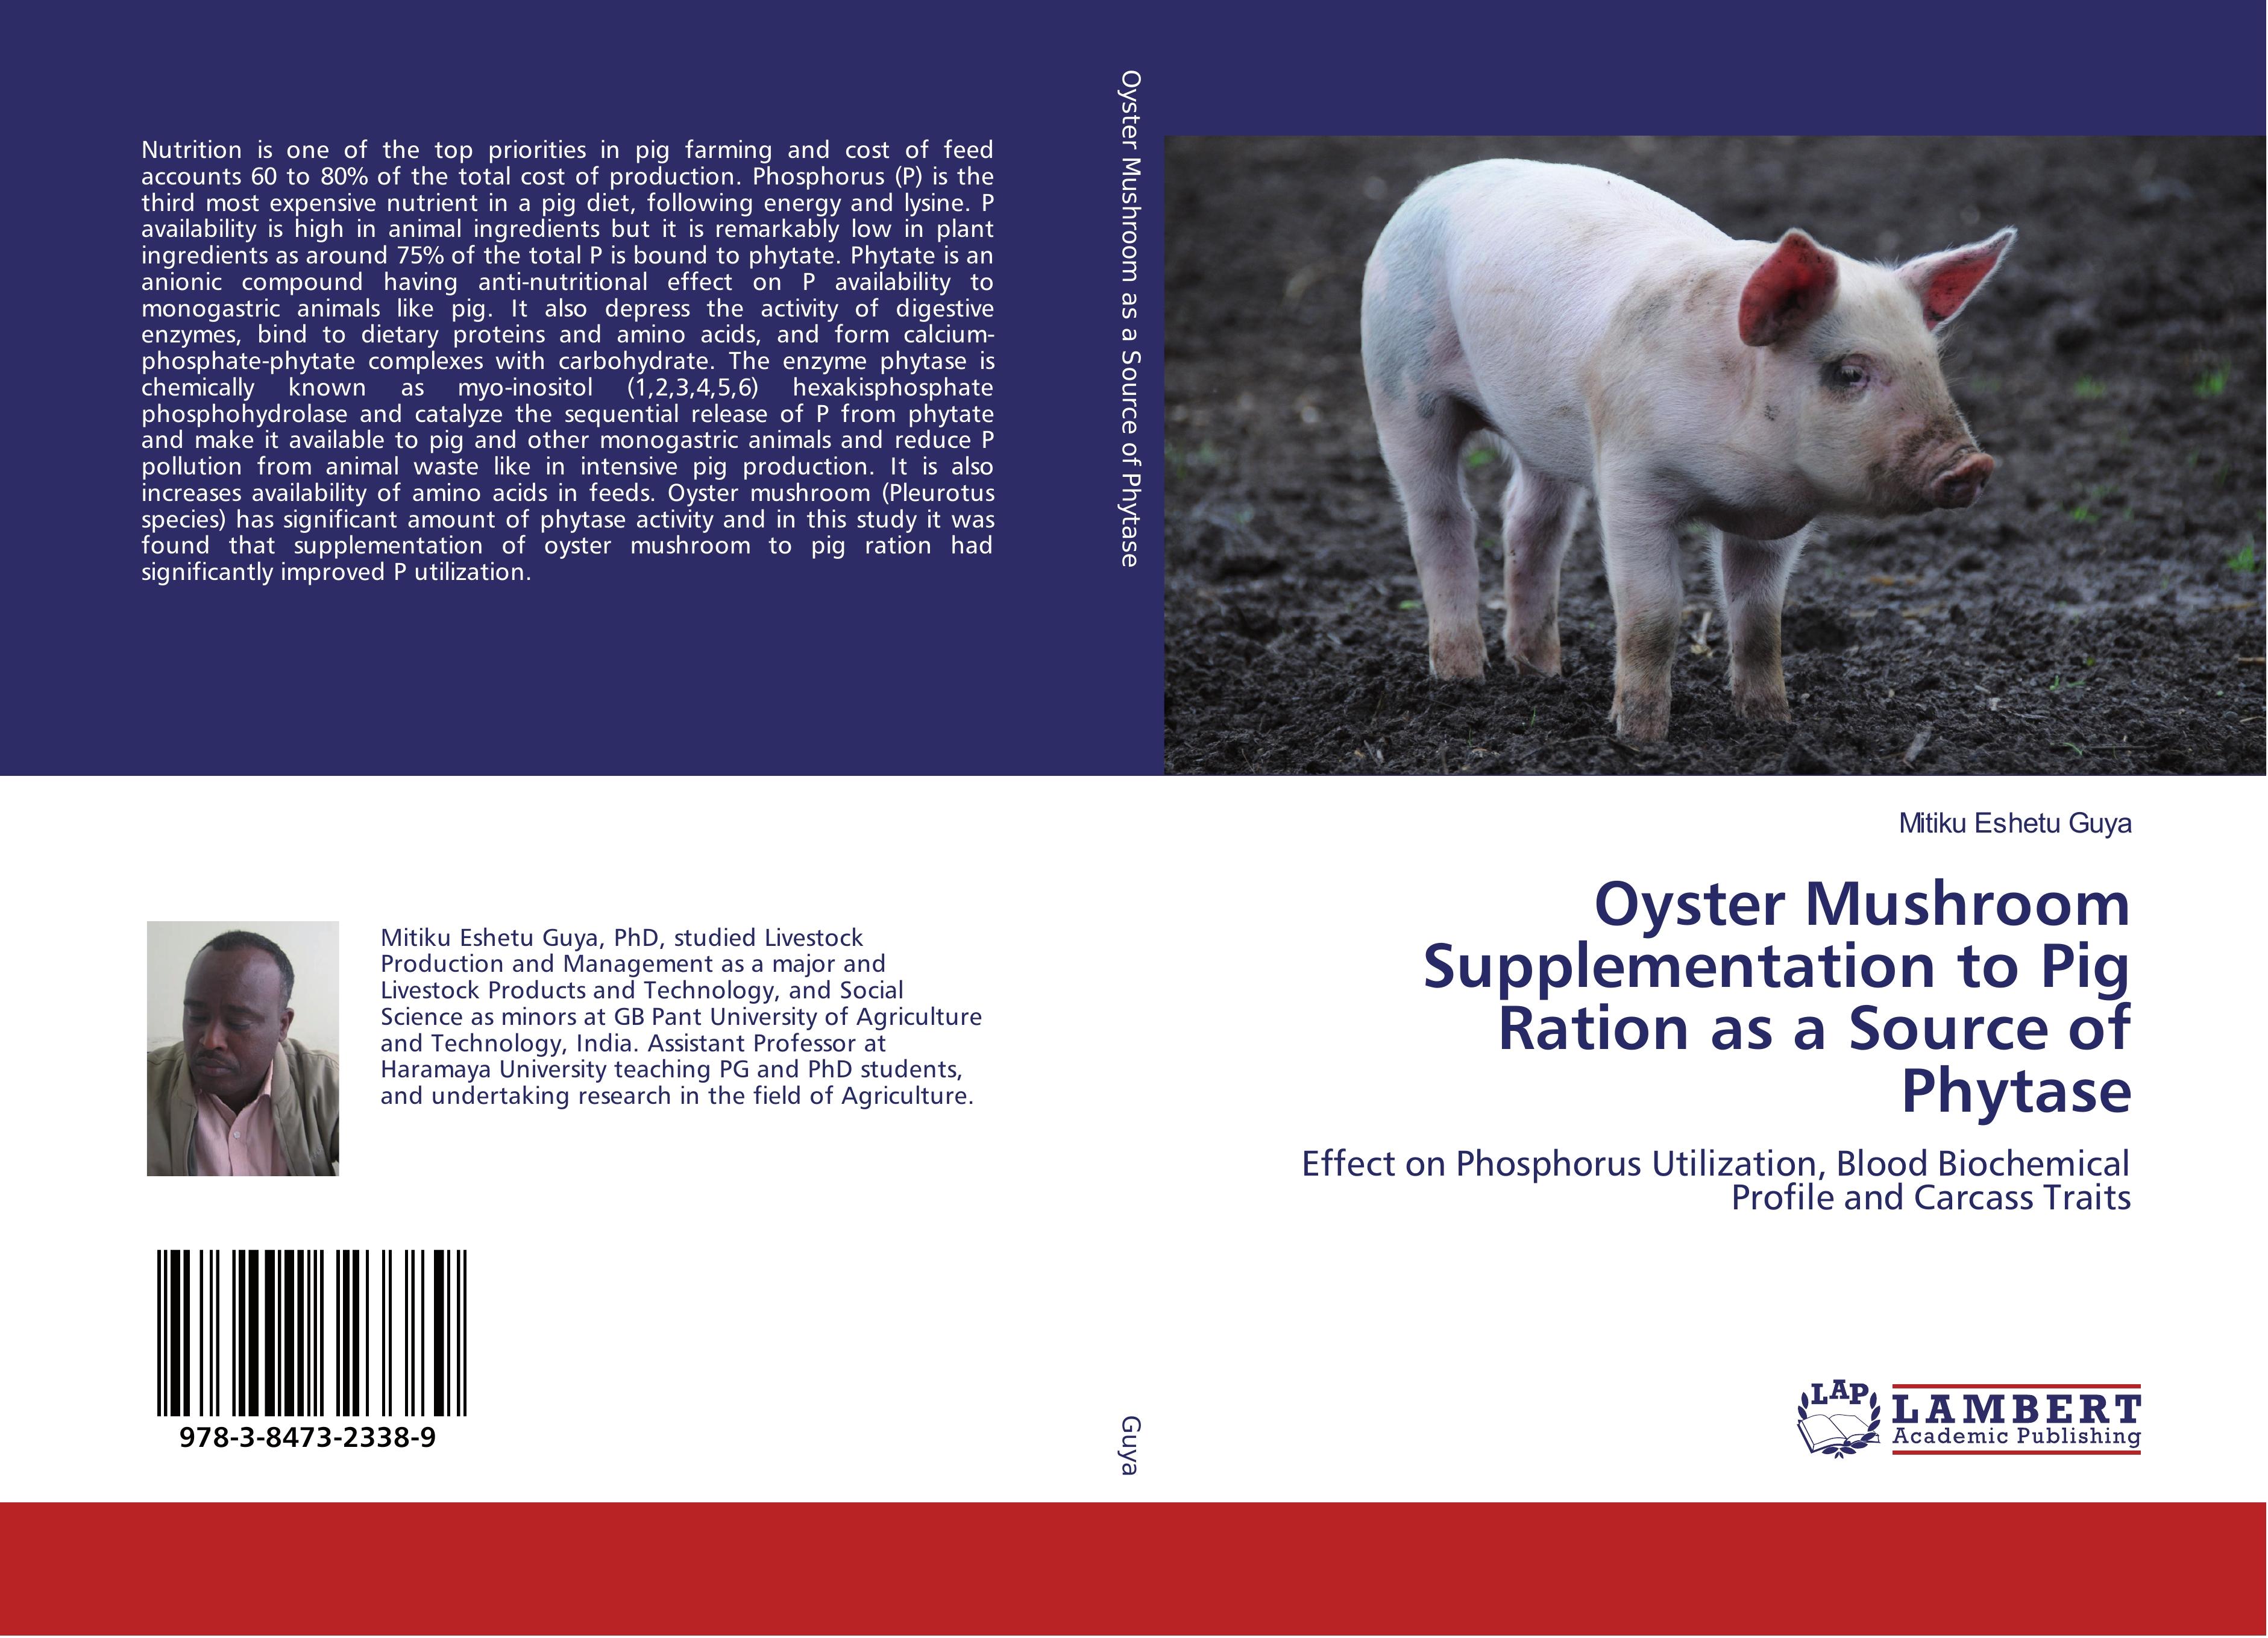 Oyster Mushroom Supplementation to Pig Ration as a Source of Phytase - Mitiku Eshetu Guya